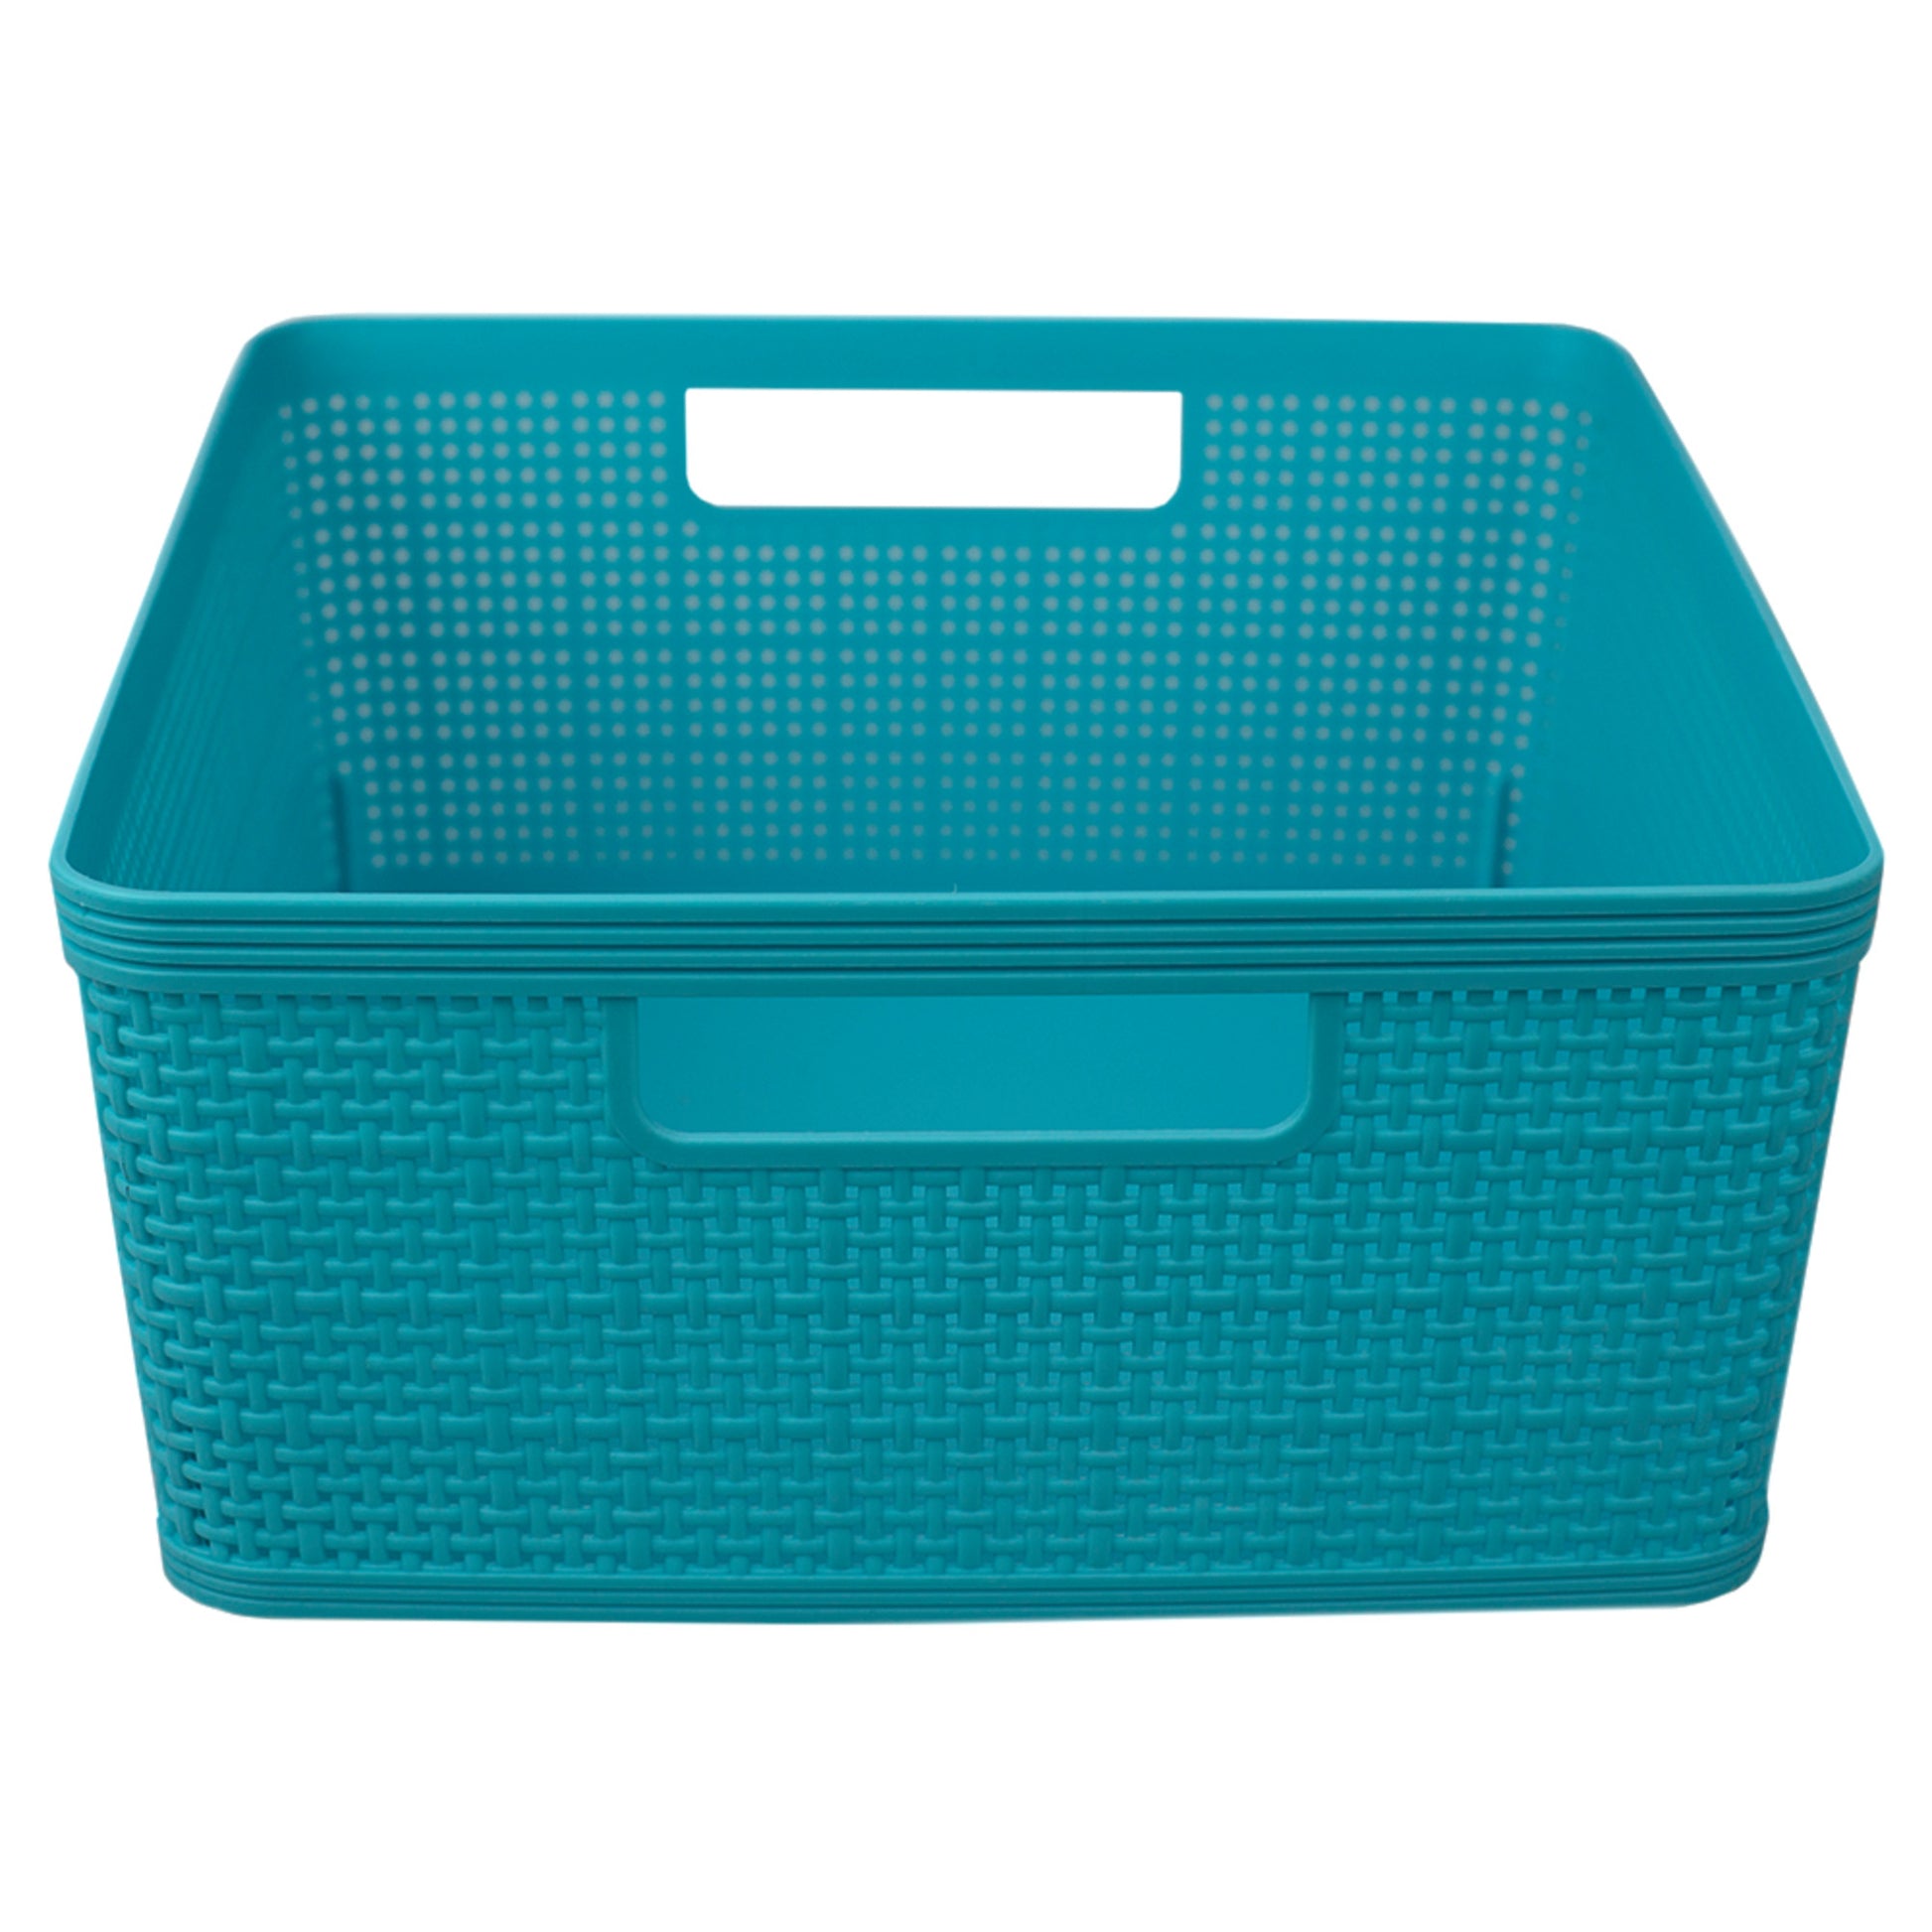 Home Basics Trellis Large Plastic Storage Basket with Cut-Out Handles, Turquoise - Turquoise